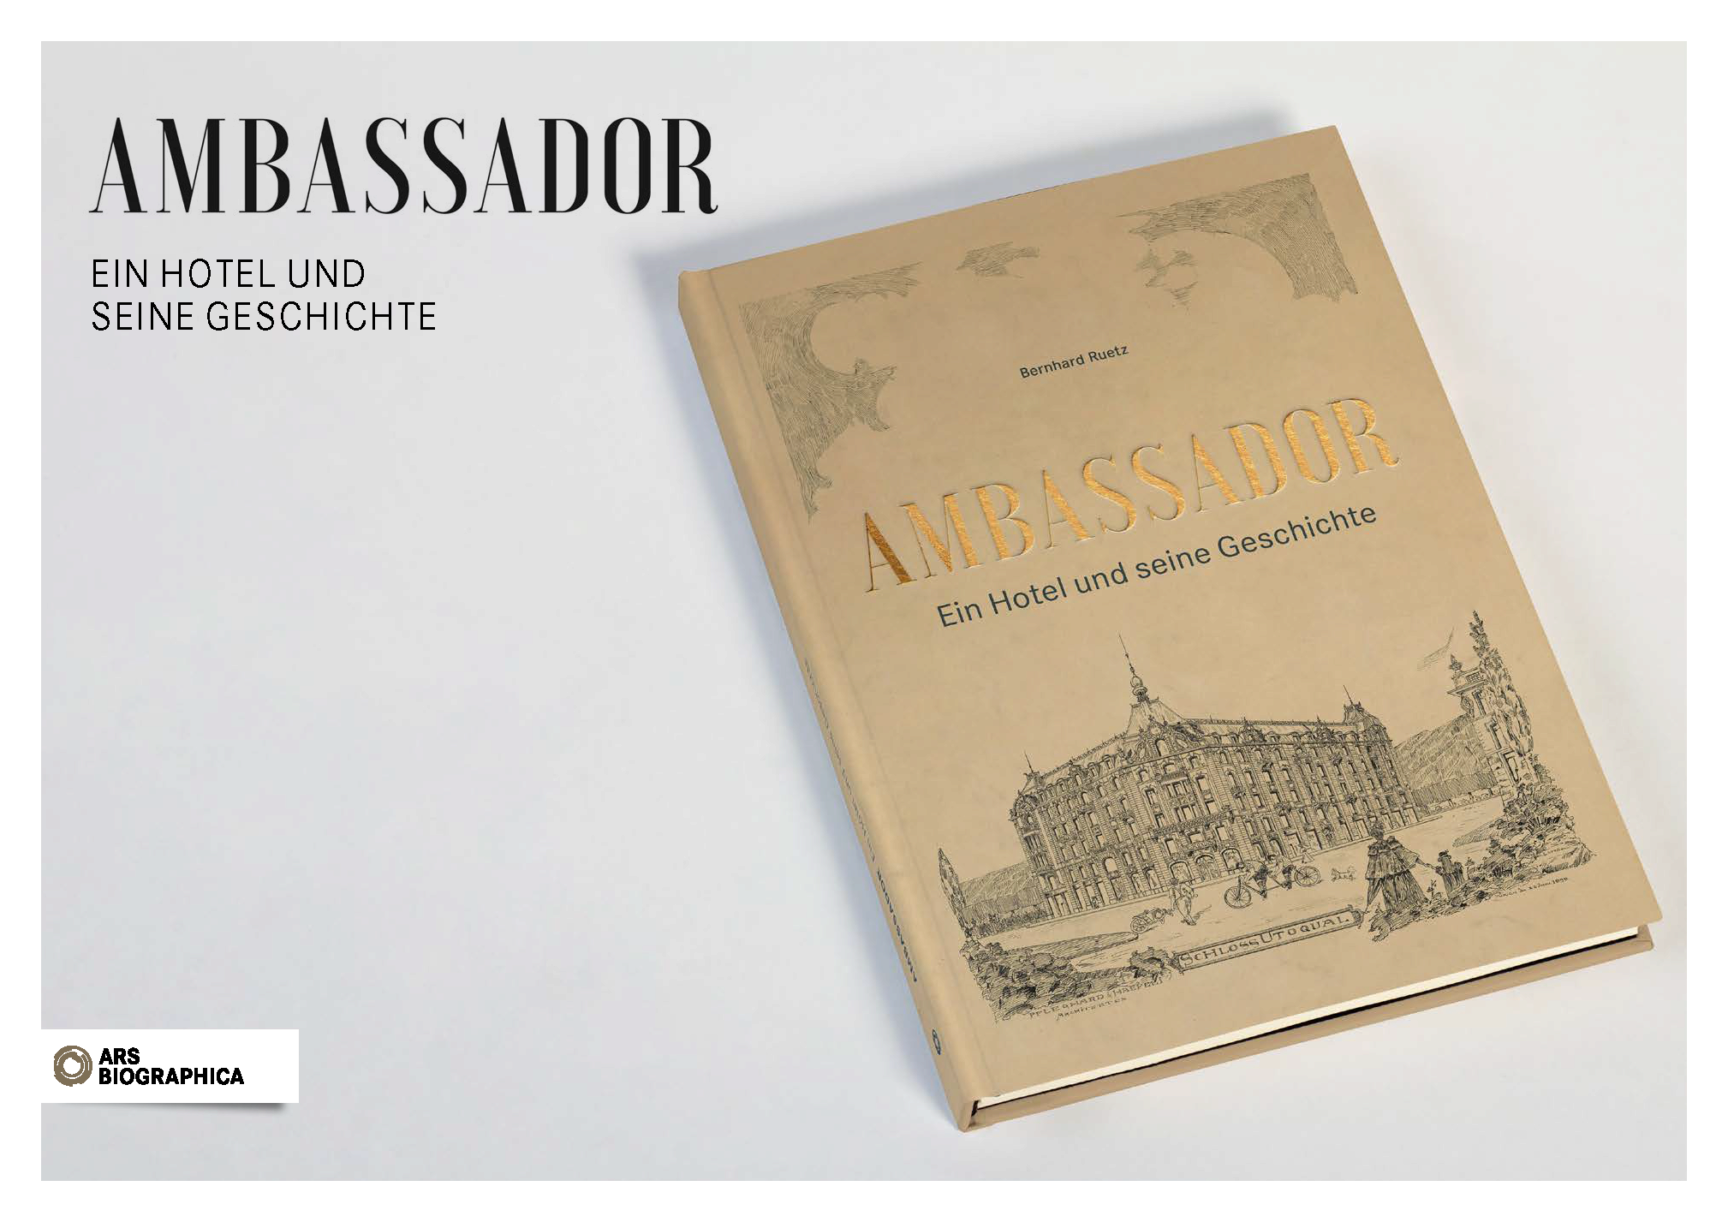 Ambassador Hotel -  Geschichte